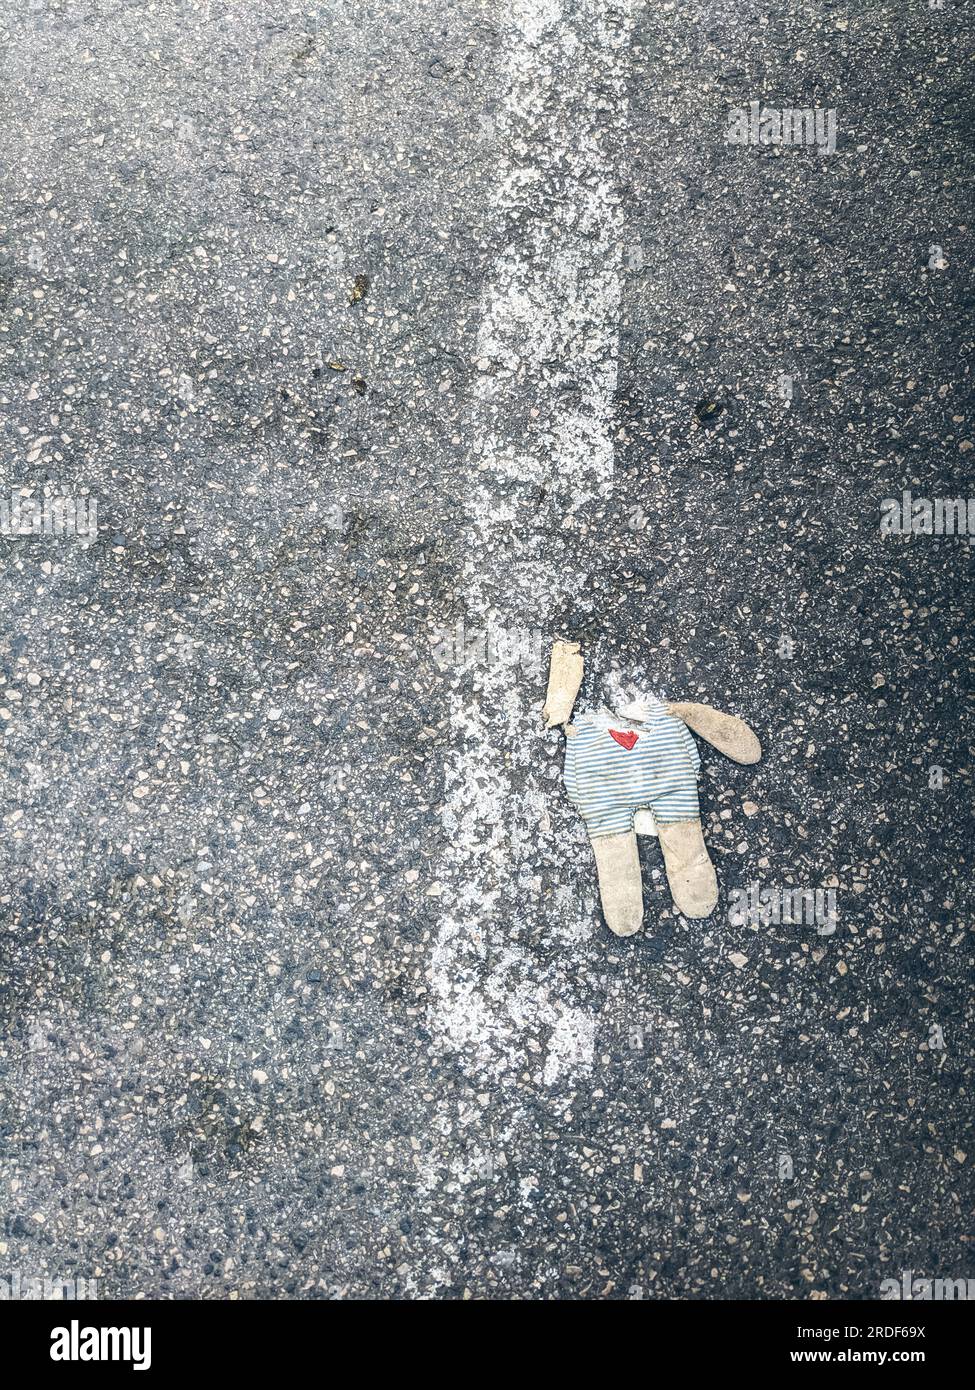 Un giocattolo sporco senza testa giace sull'asfalto Foto Stock